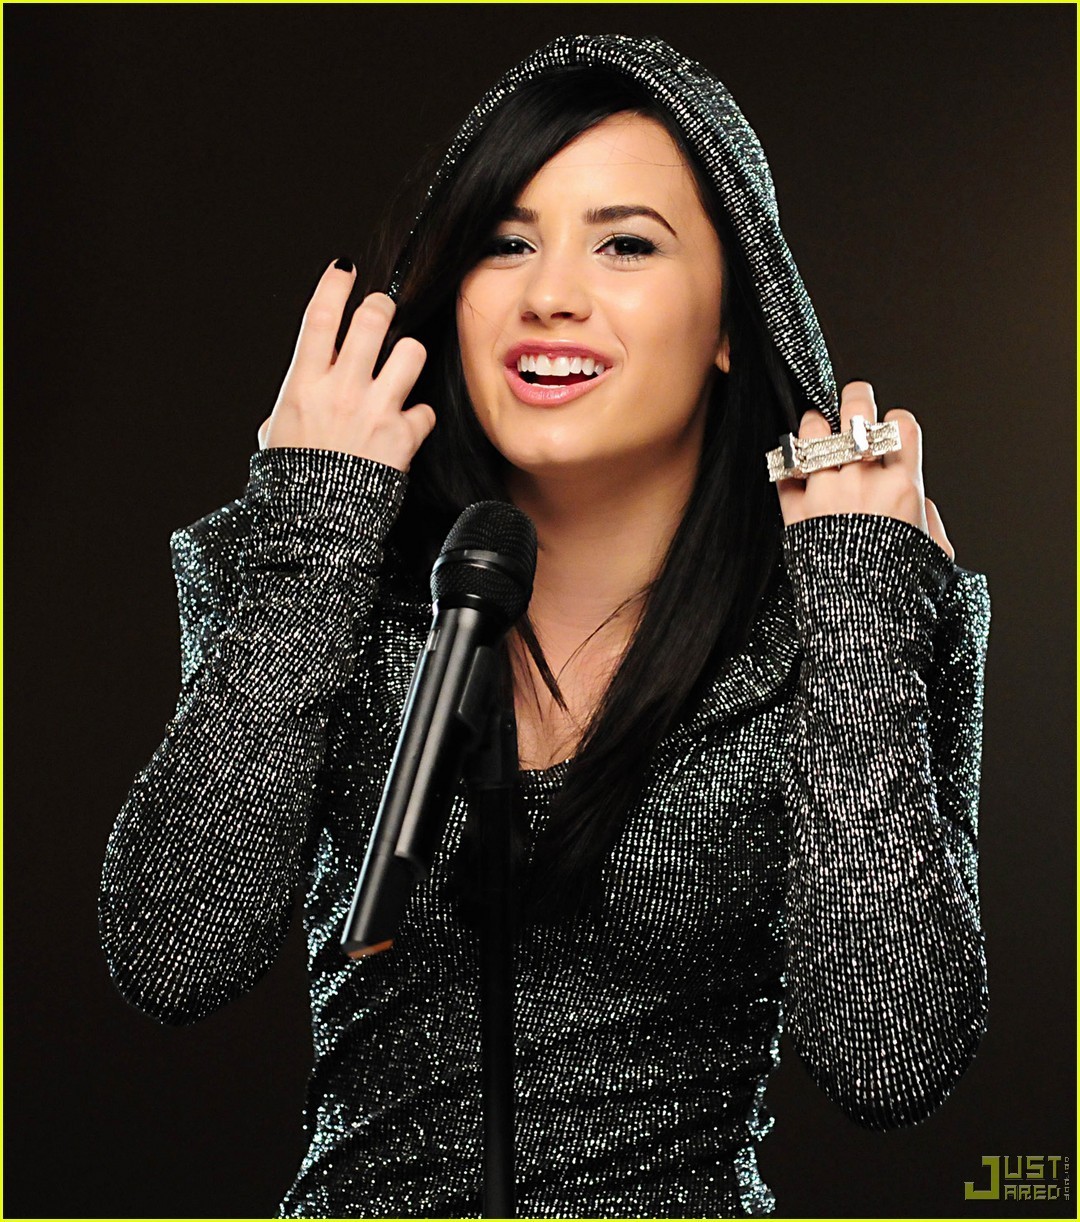 http://images2.fanpop.com/image/photos/8800000/Demi-Lovato-demi-lovato-8840165-1080-1222.jpg